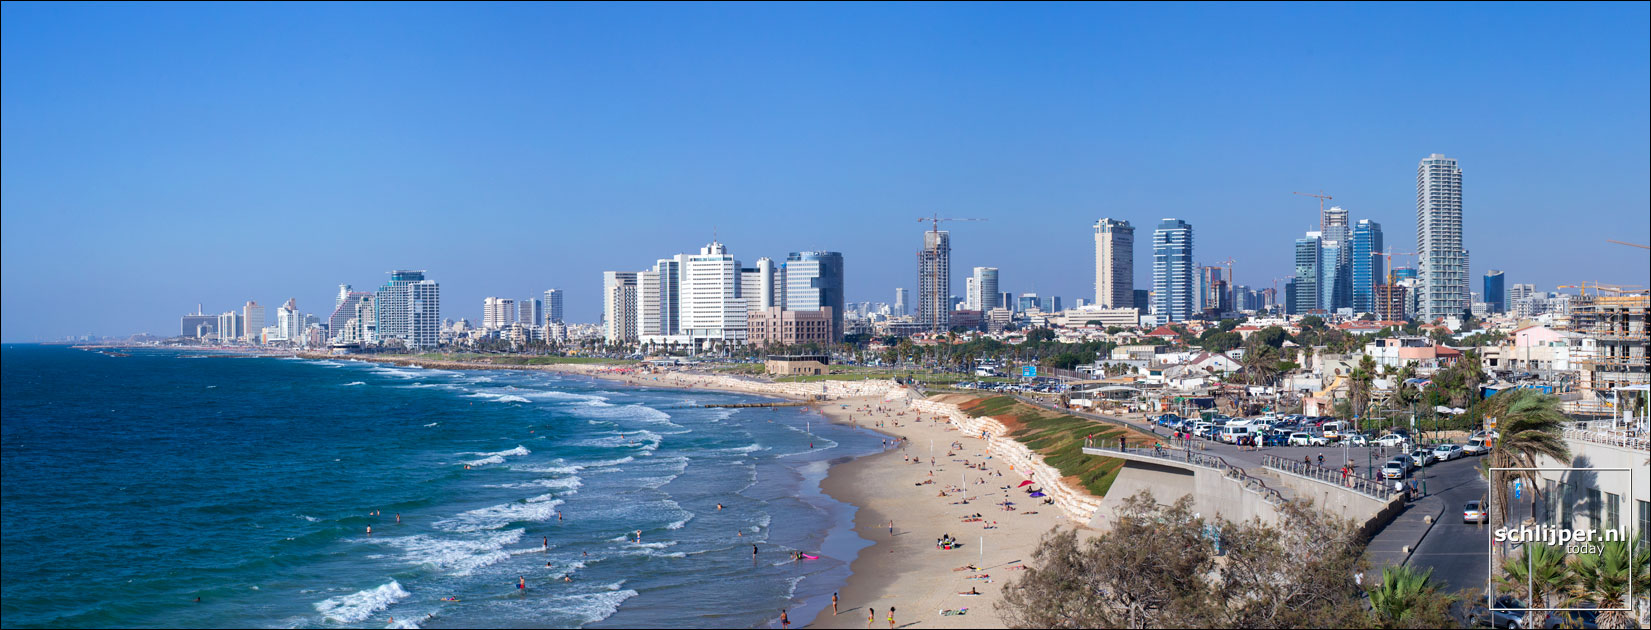 Israel, Tel Aviv, 21 augustus 2014